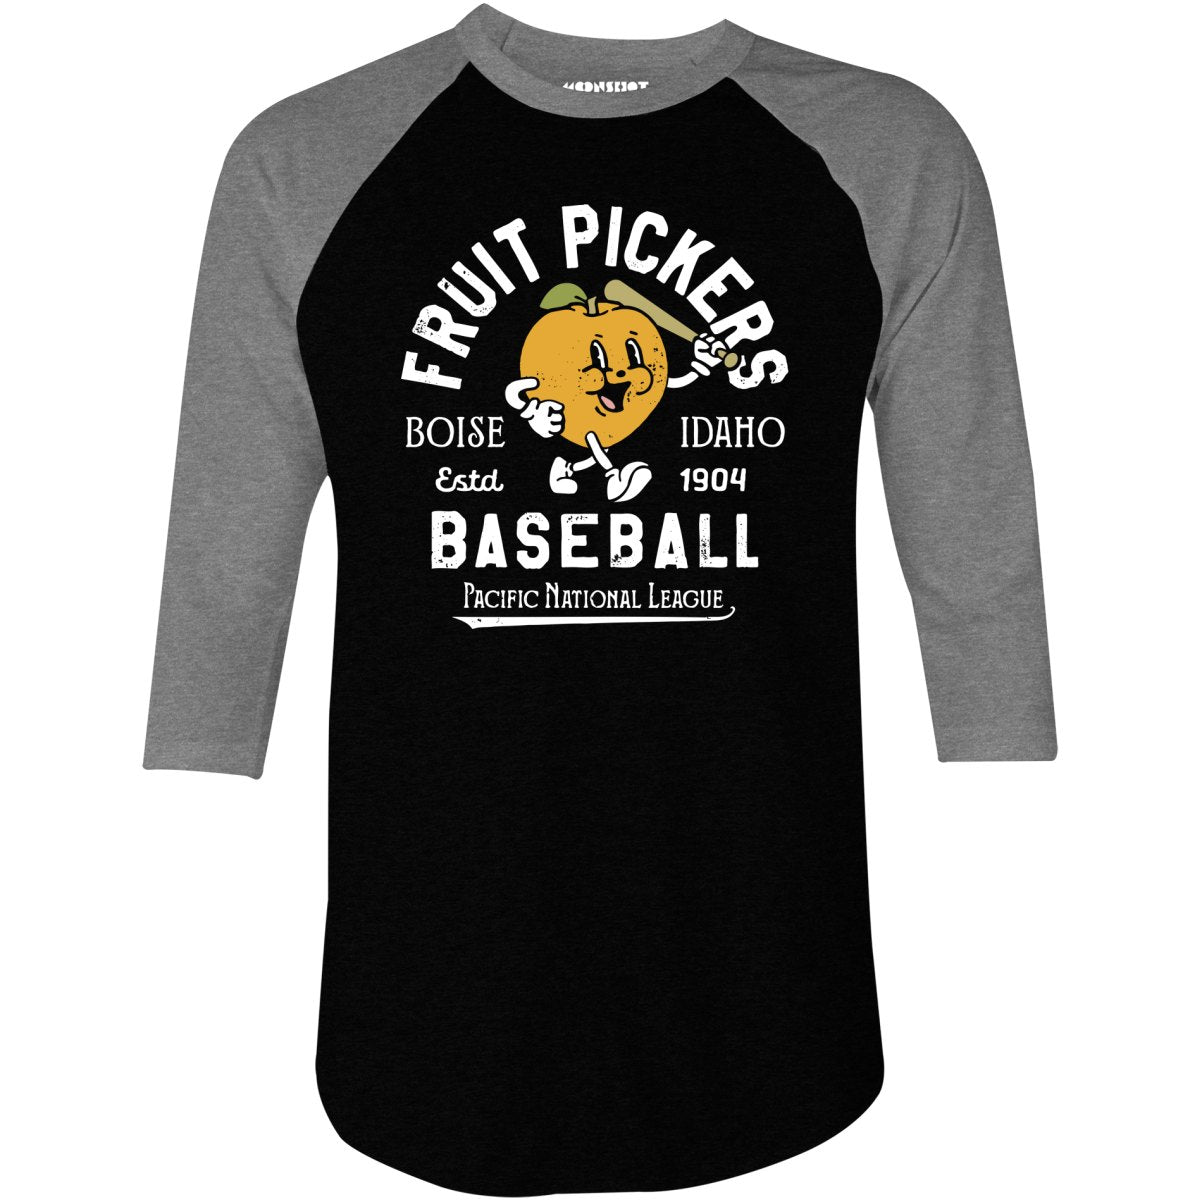 Boise Fruit Pickers - Idaho - Vintage Defunct Baseball Teams - 3/4 Sleeve Raglan T-Shirt